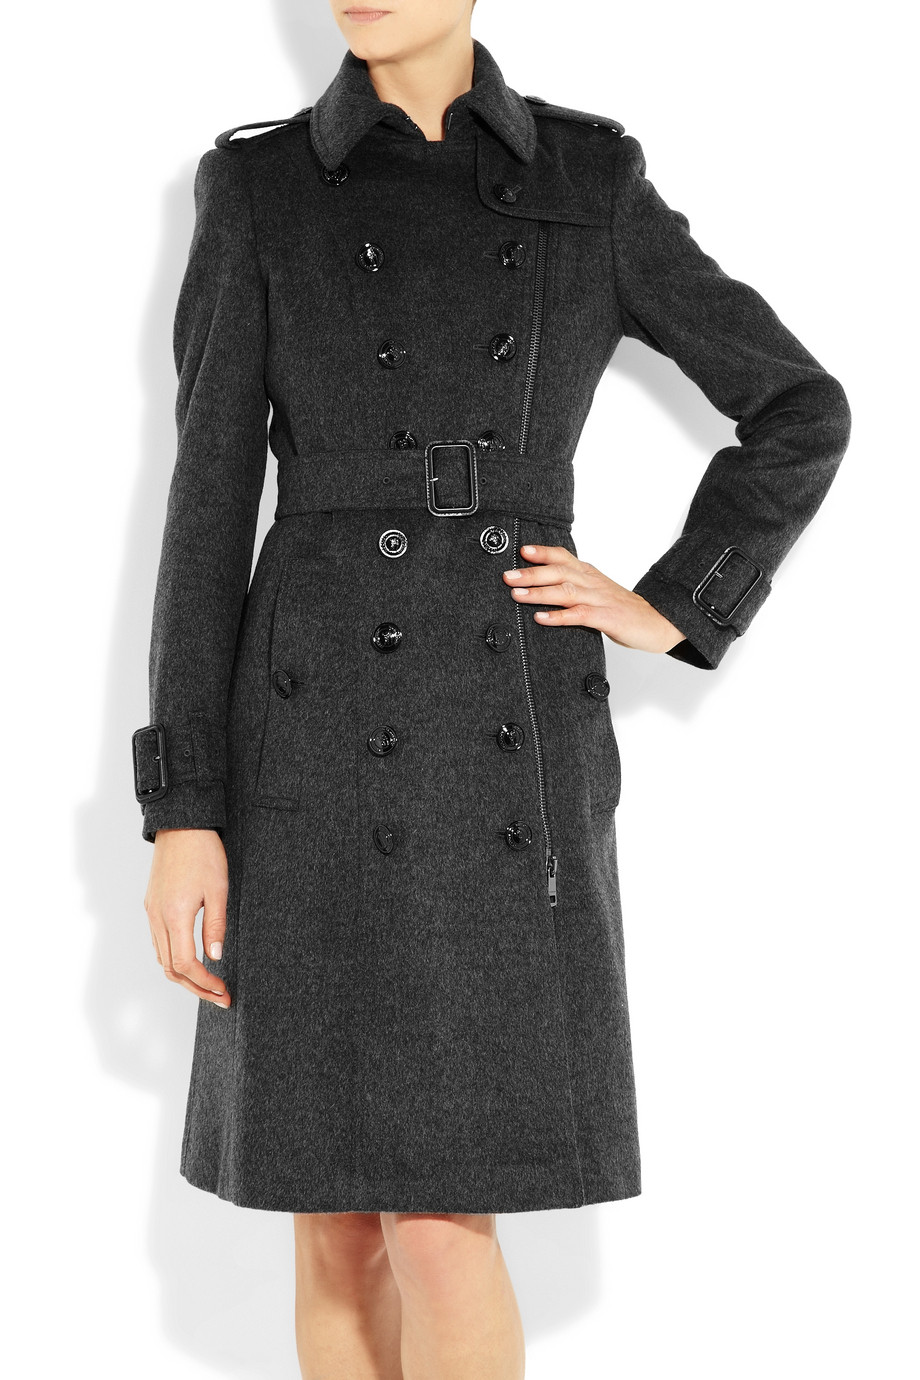 tutti: Burberry London's classic trench coat